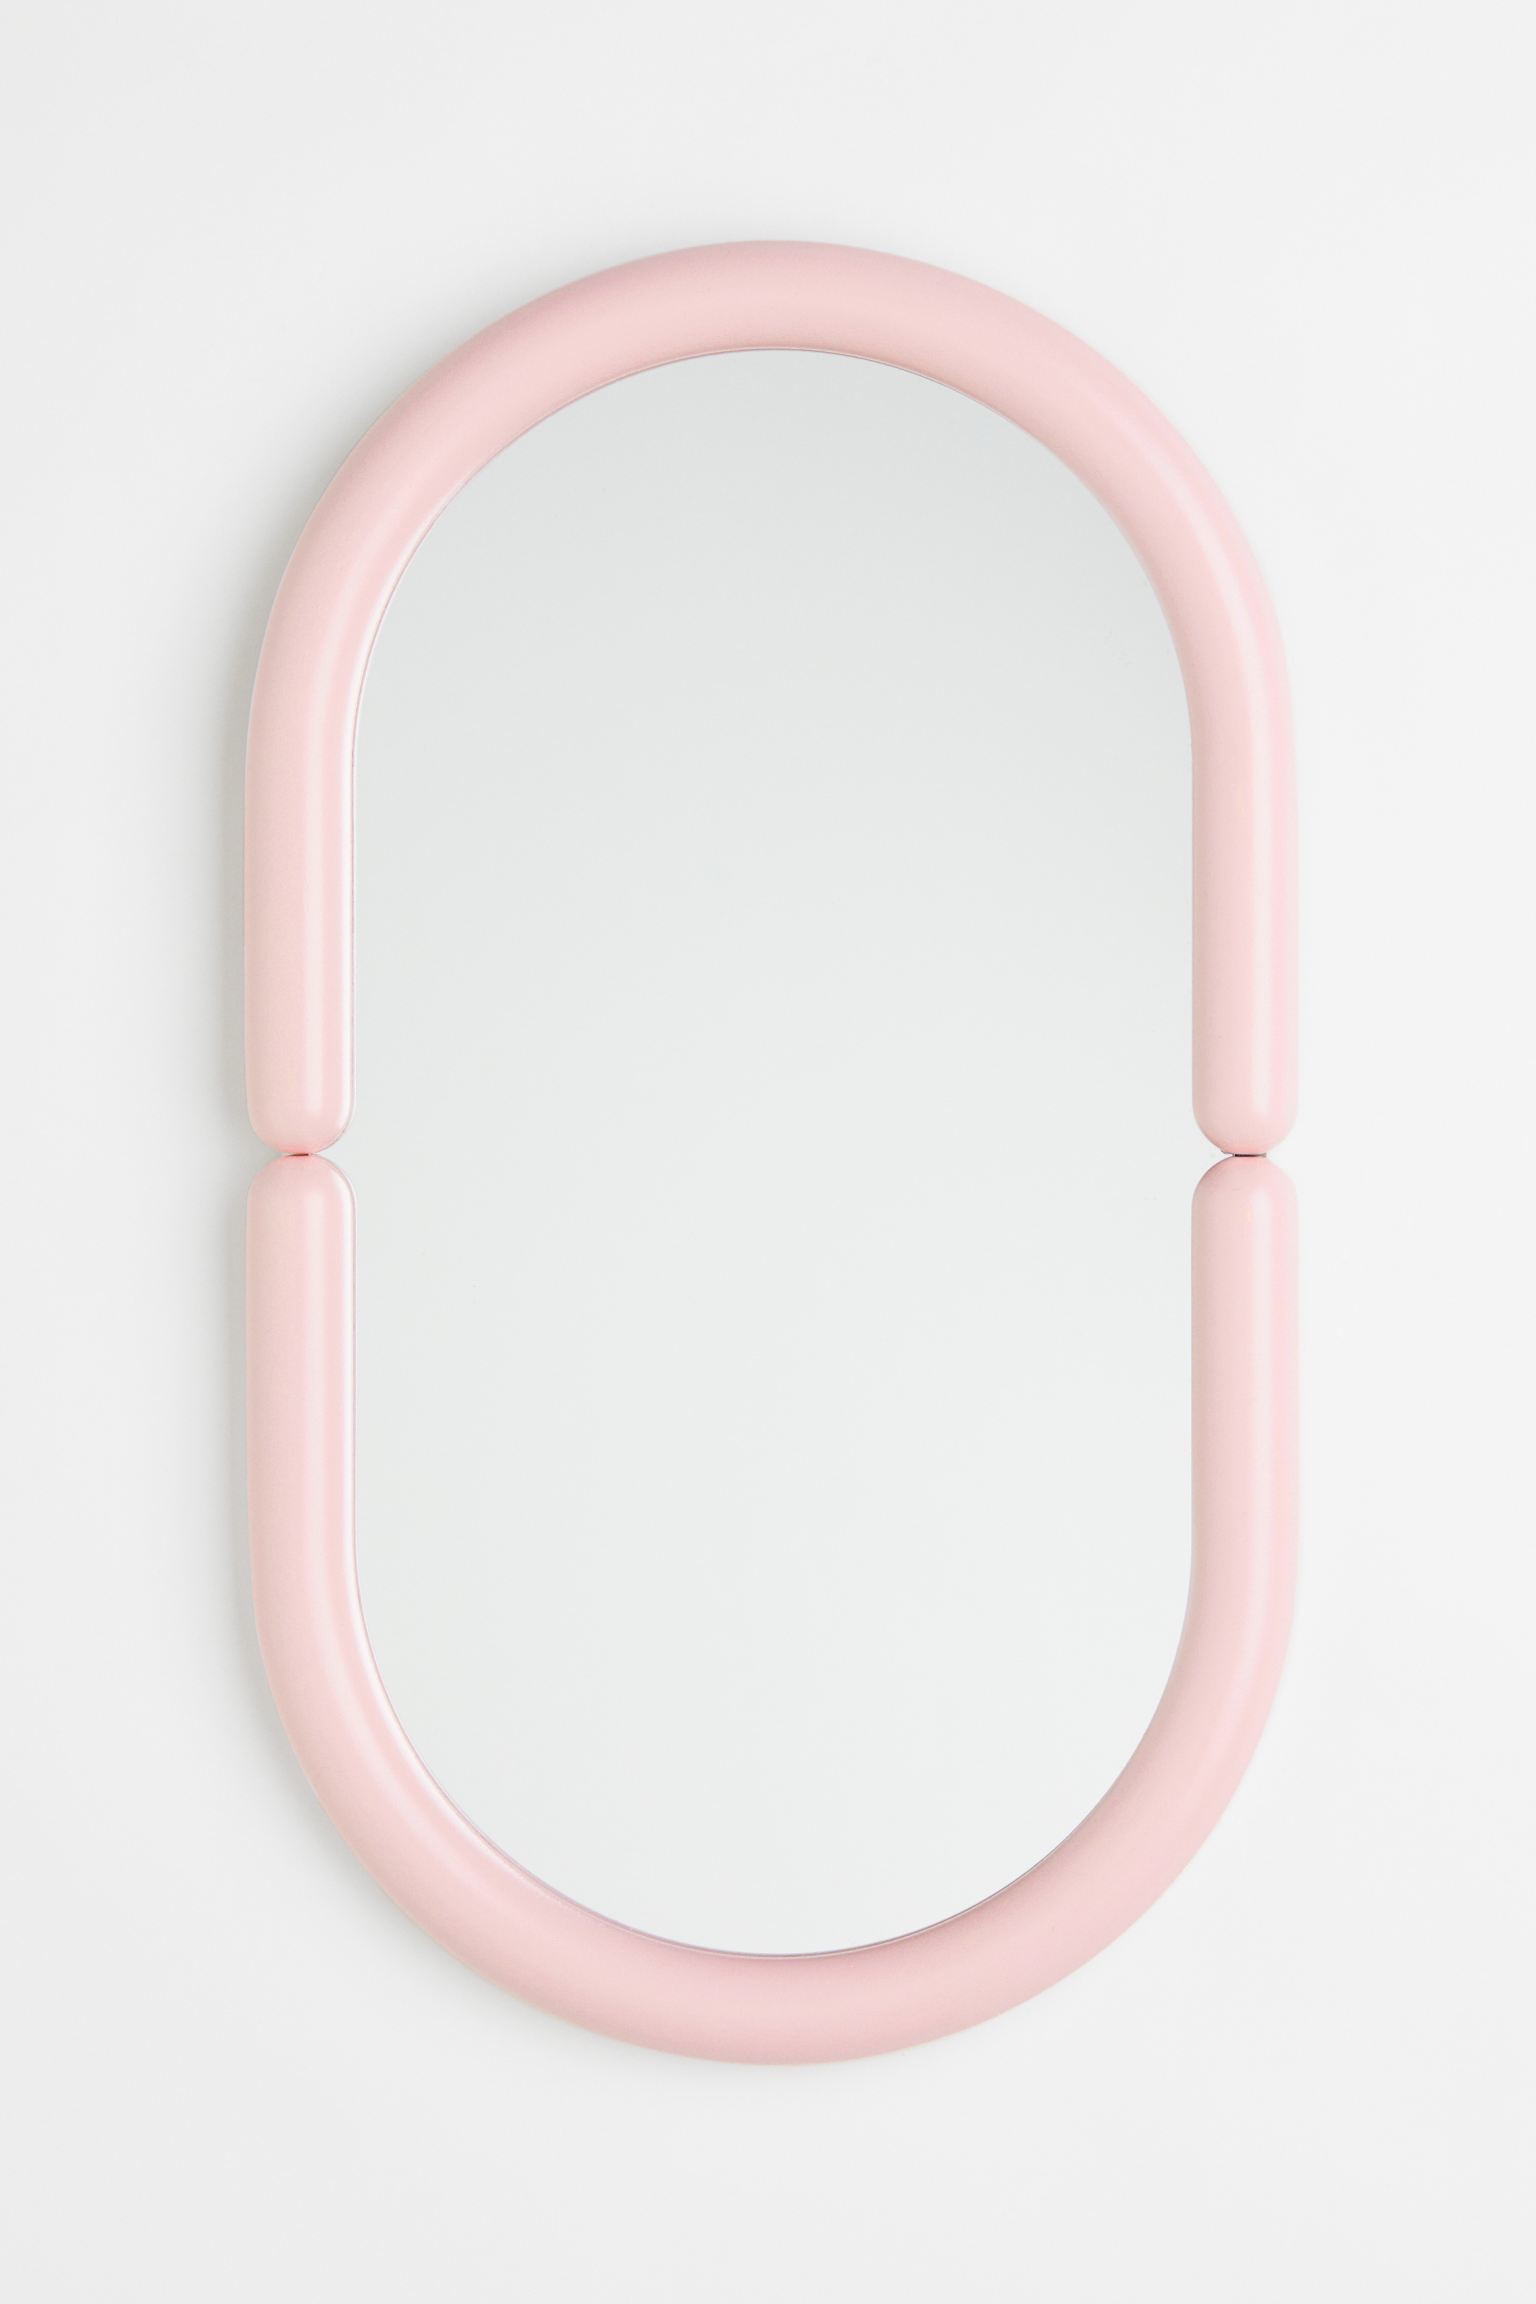 H&M Home Овальное зеркало, светло-розовый 1082183002 | 1082183002